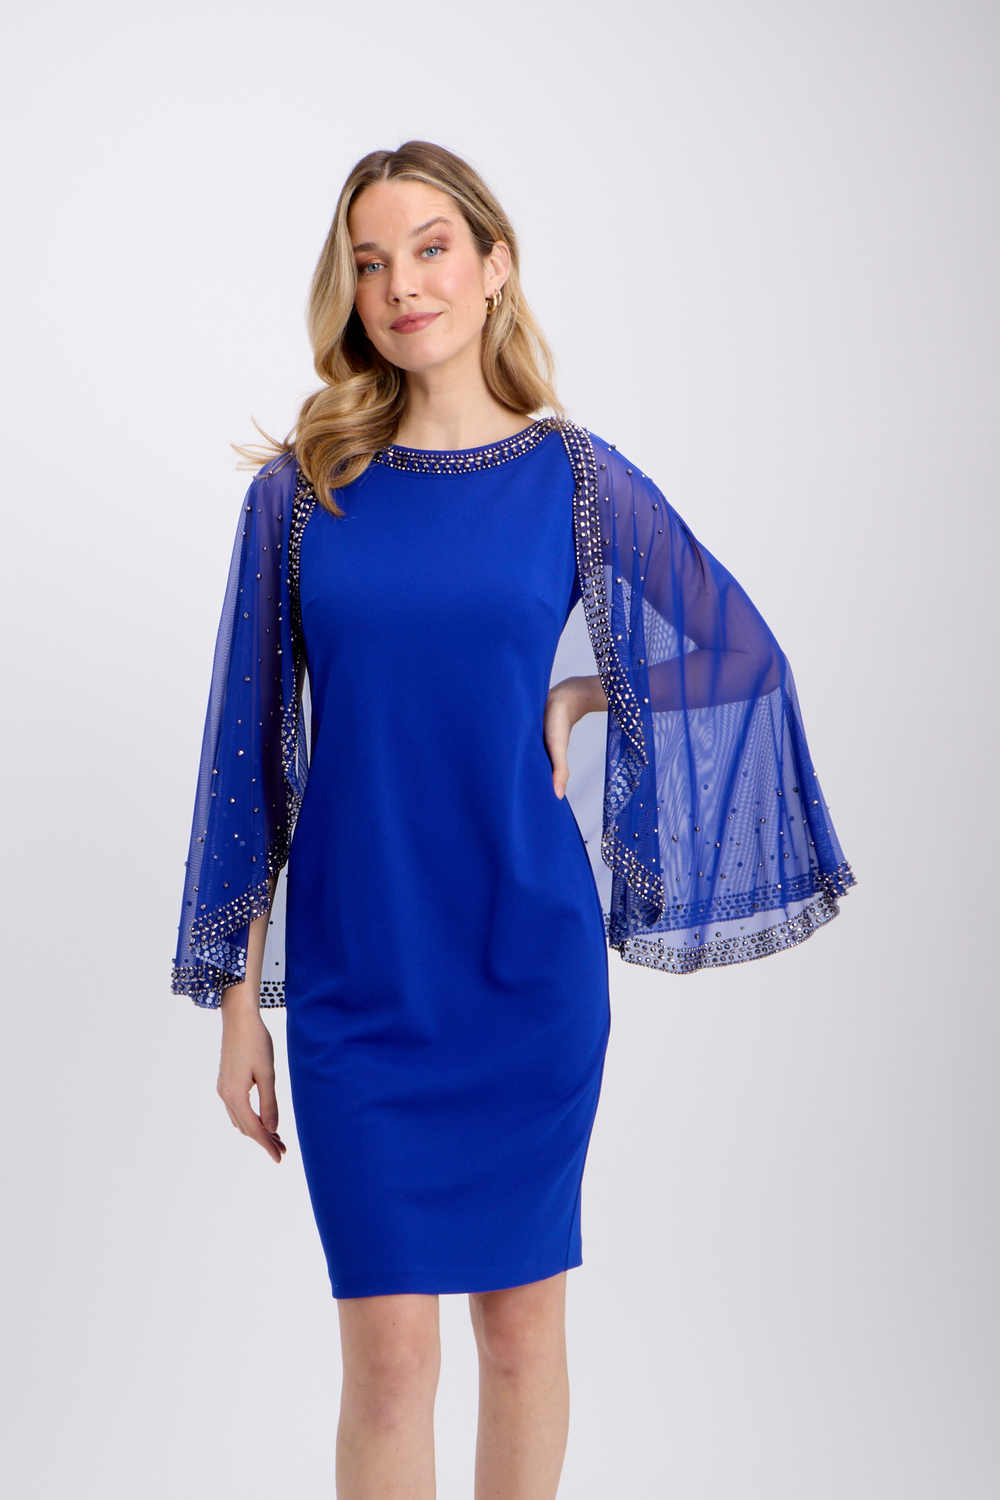 Beaded Cape Dress Style 234712. Royal Sapphire 163